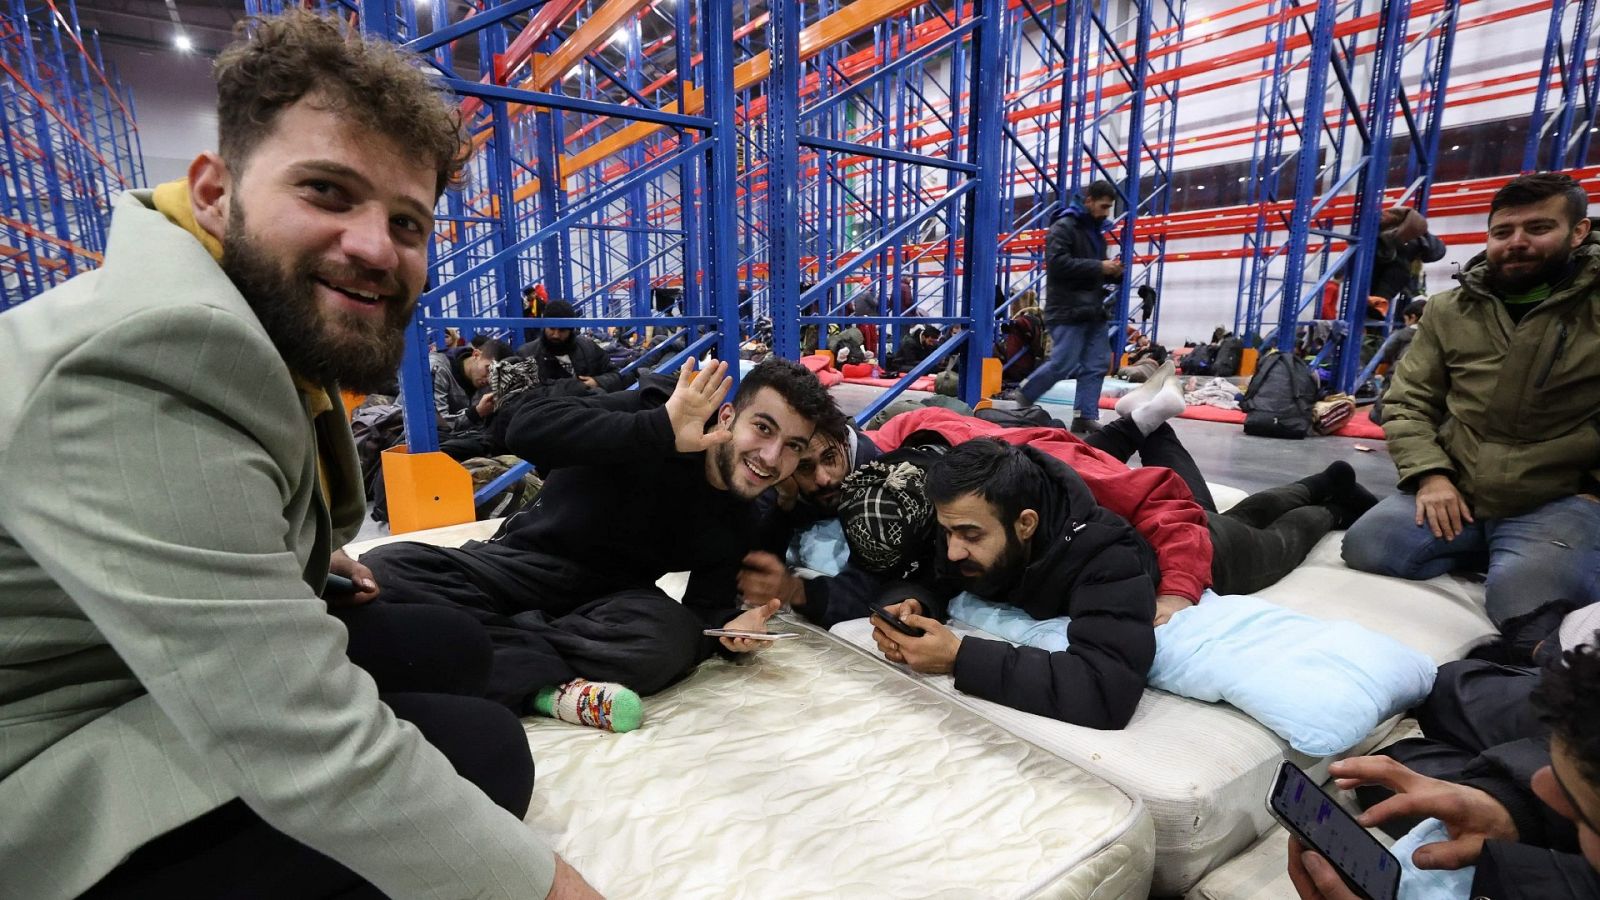 Crisis migratoria: Un albergue cobija a cientos de migrantes